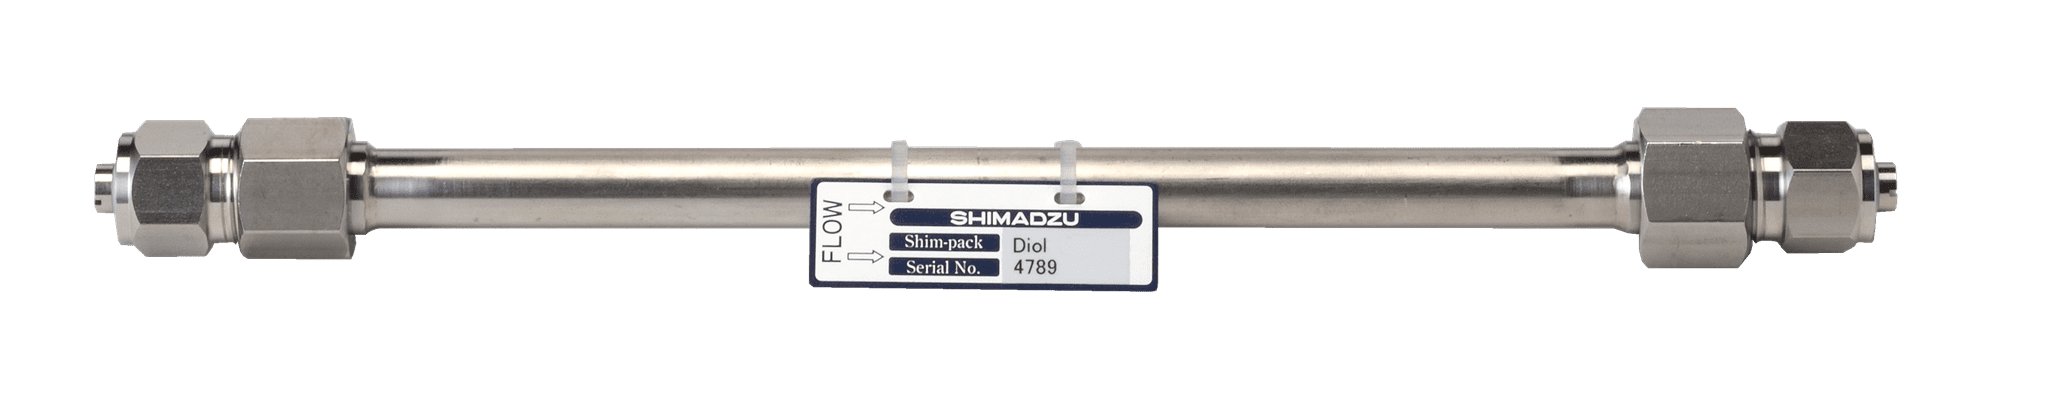 Obrázek Shim-pack Diol-150; 5 µm; 500 x 7.9